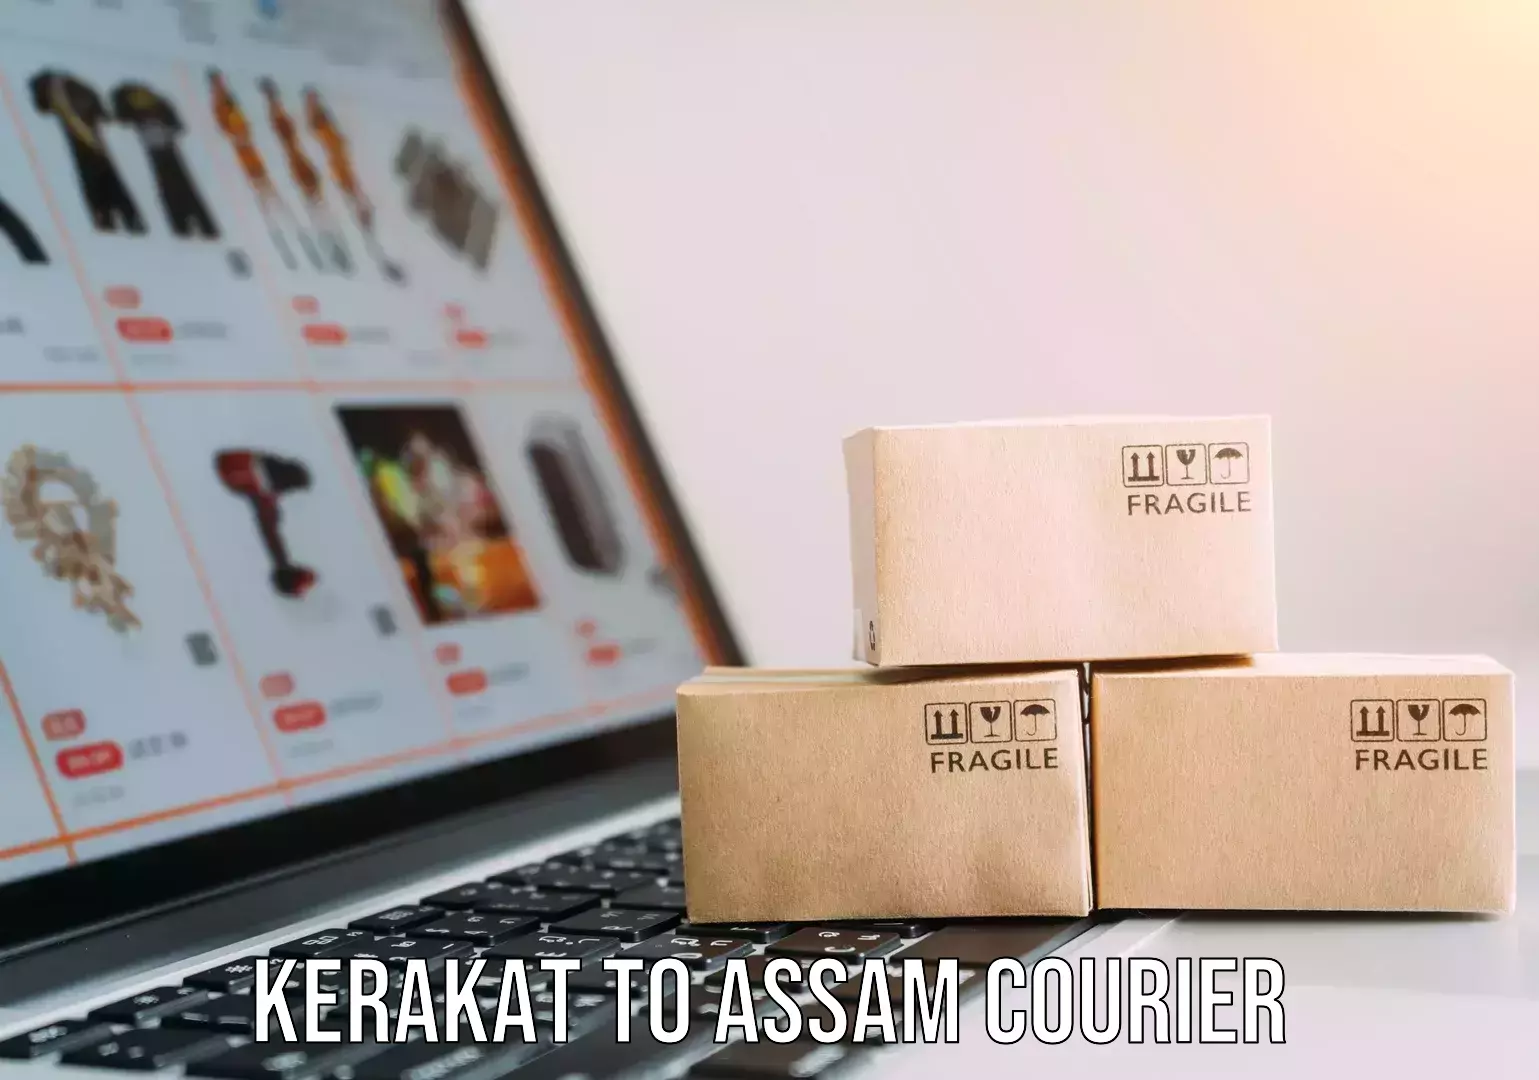 Professional moving company Kerakat to Assam